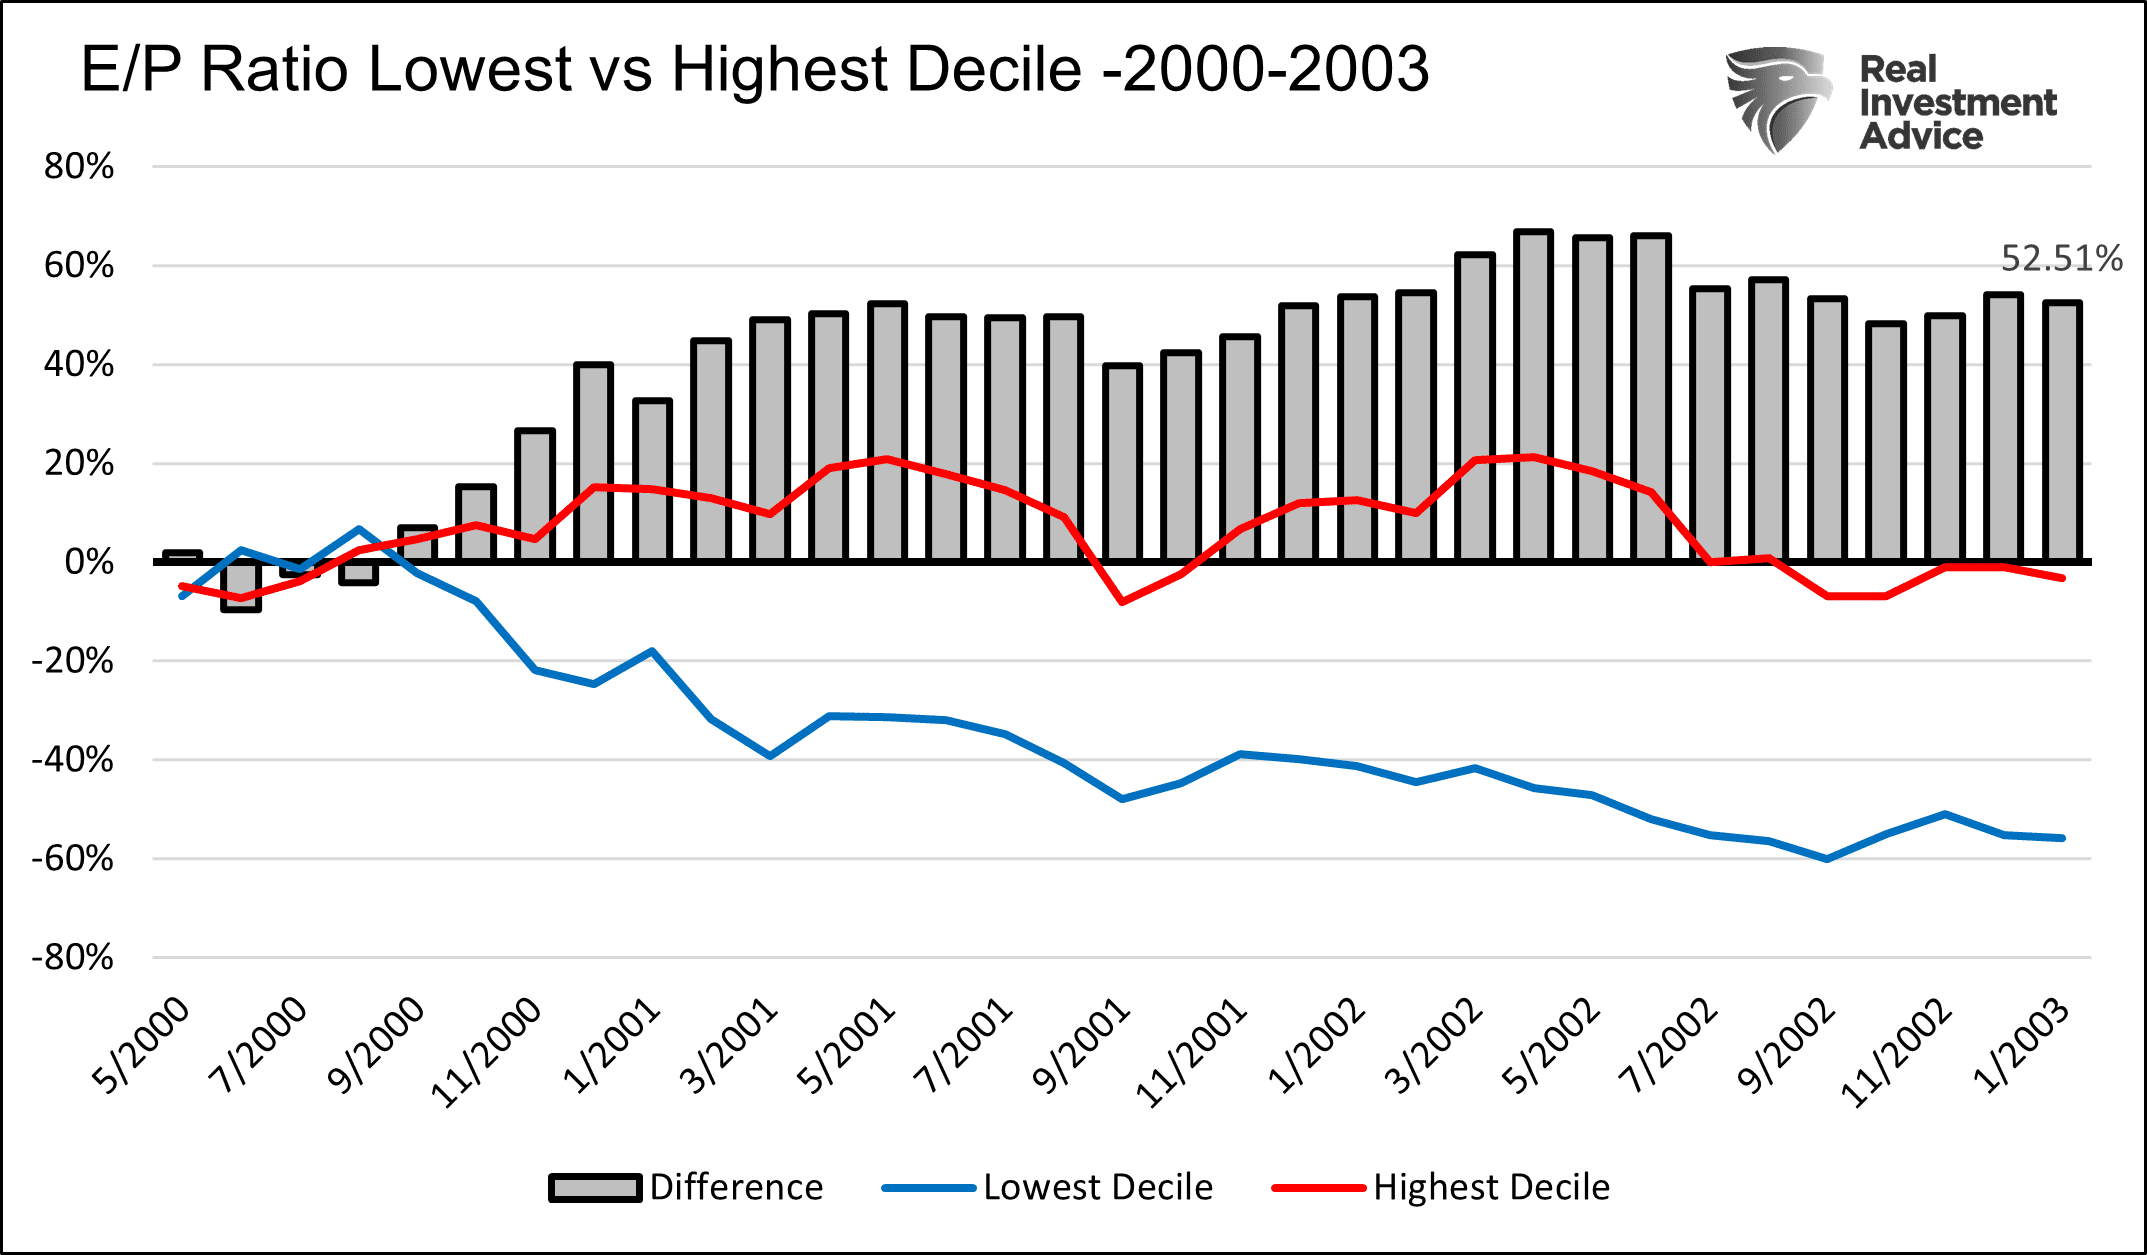 E/P Ratio Lowest vs Highest 2000-2003